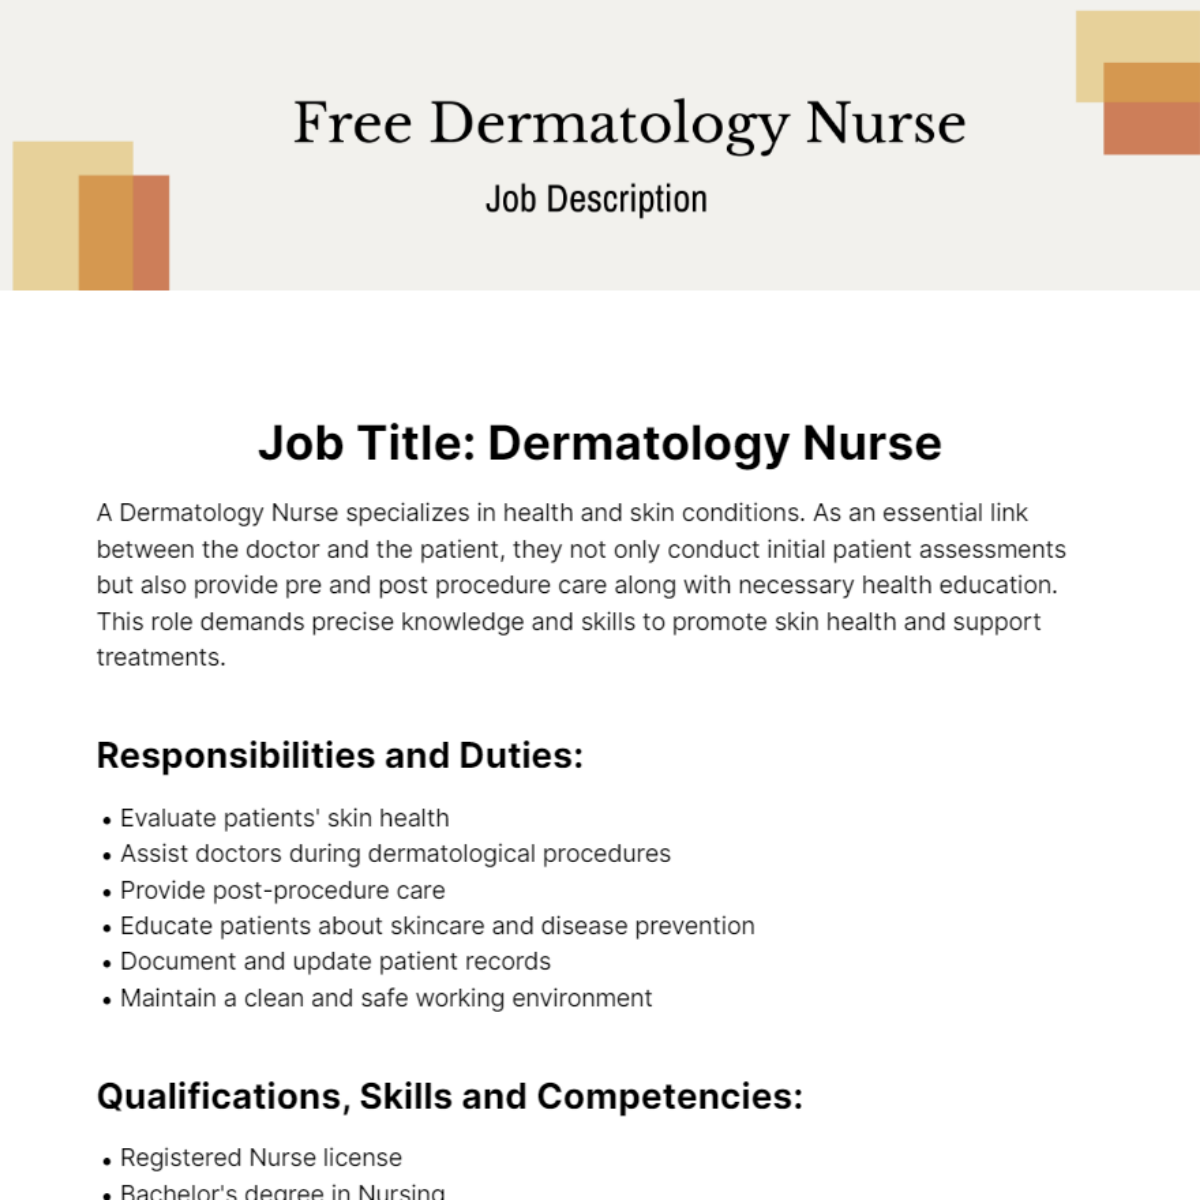 Free Dermatology Nurse Job Description Template